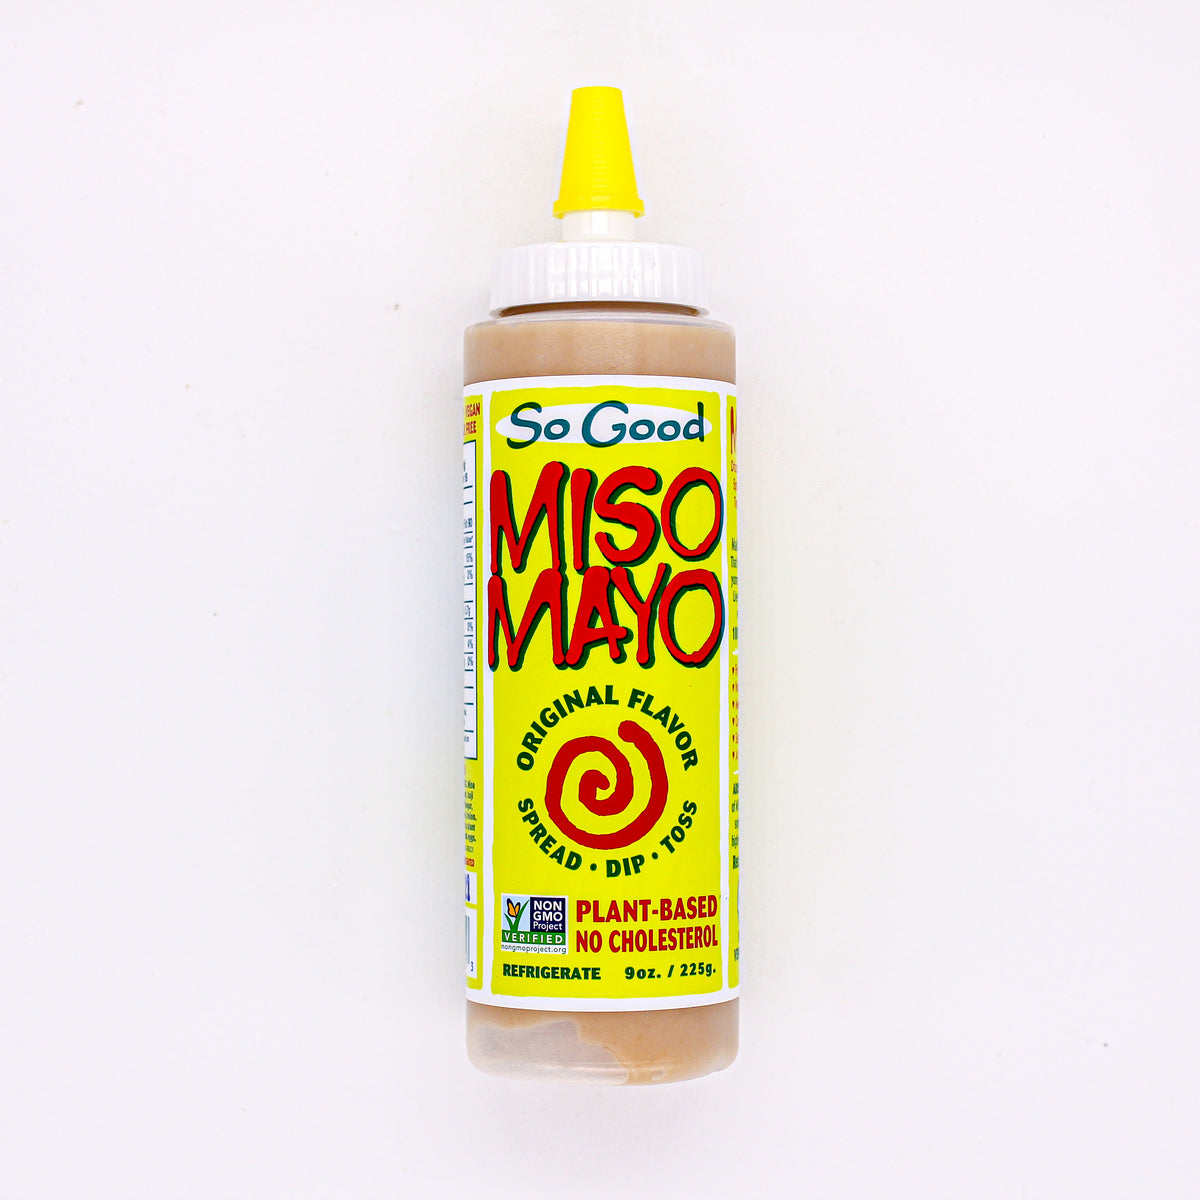 Miso Mayo Original